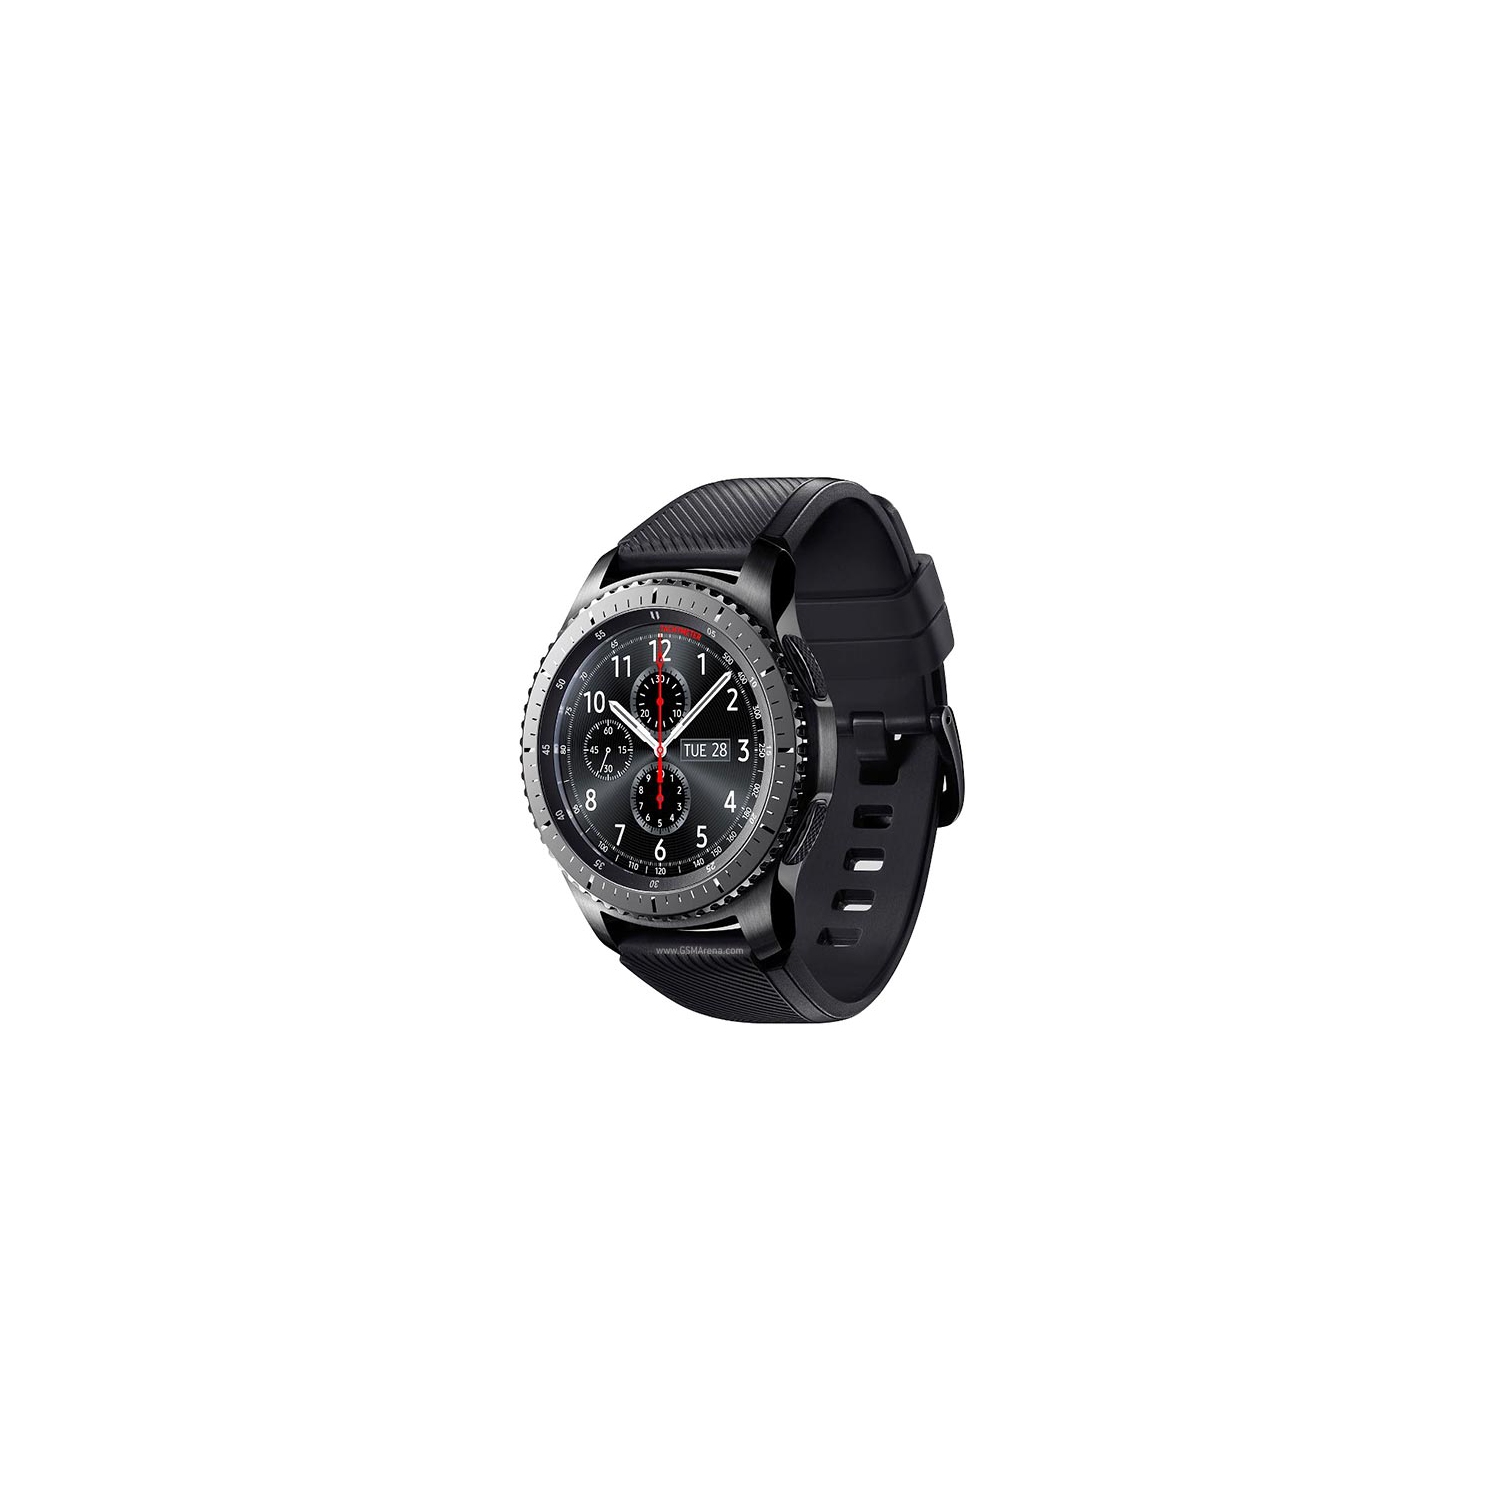 Samsung Galaxy Gear S3 Frontier SM-R760 Smartwatch , International Version, Black - Unlocked - Refurbished